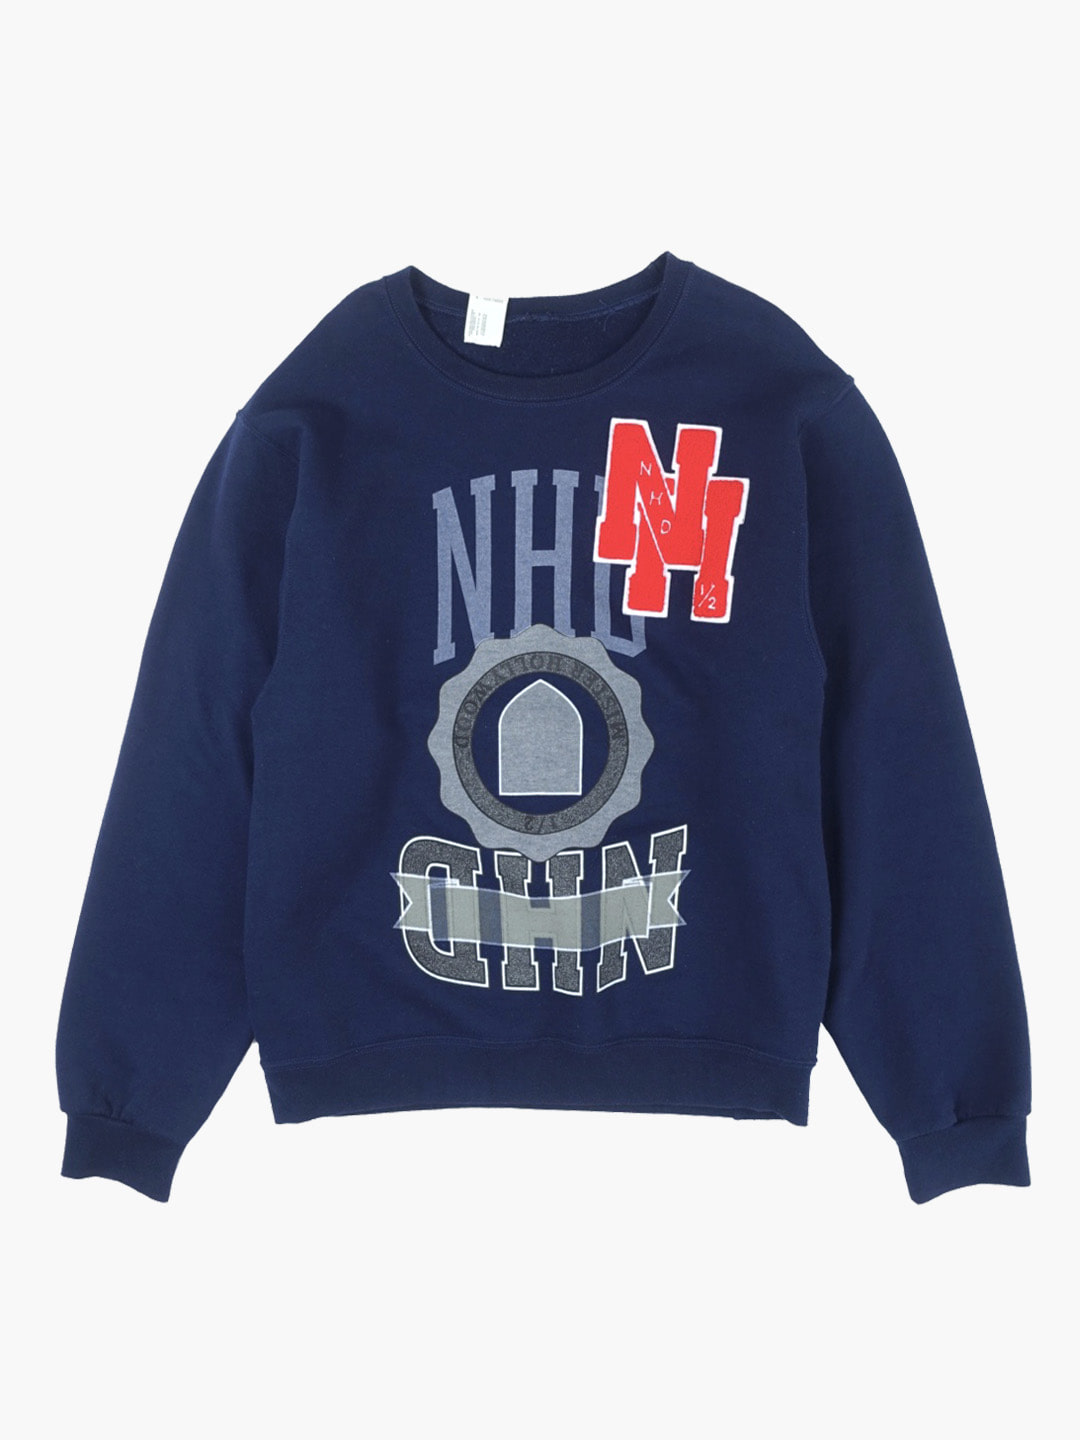 N.HOOLYWOODPatched sweatshirt